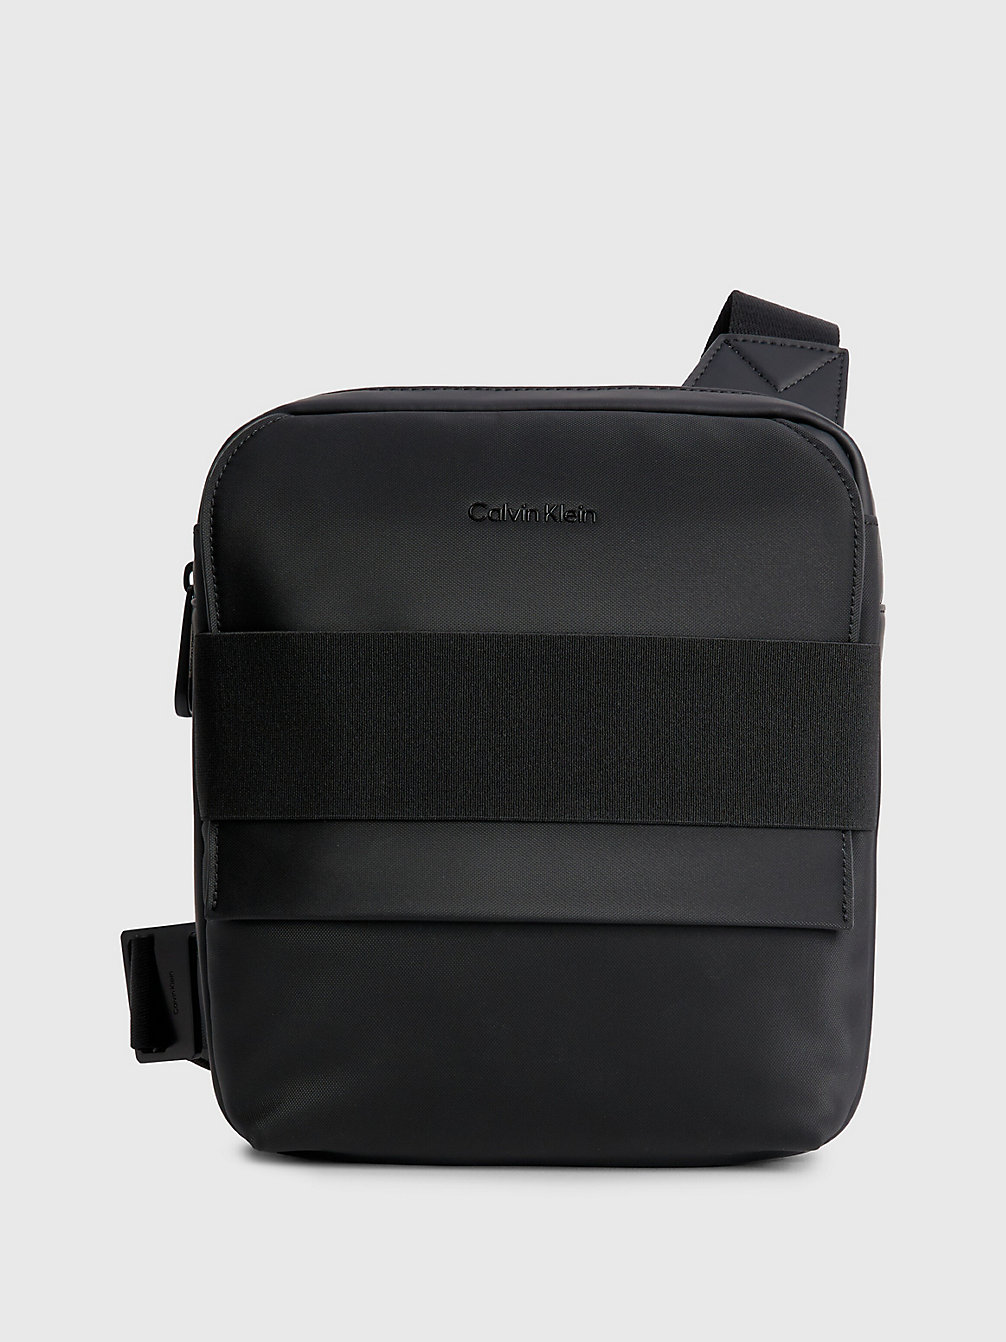 CK BLACK > Wandelbare Crossbody-Reporter-Bag Aus Recycling-Material > undefined men - Calvin Klein